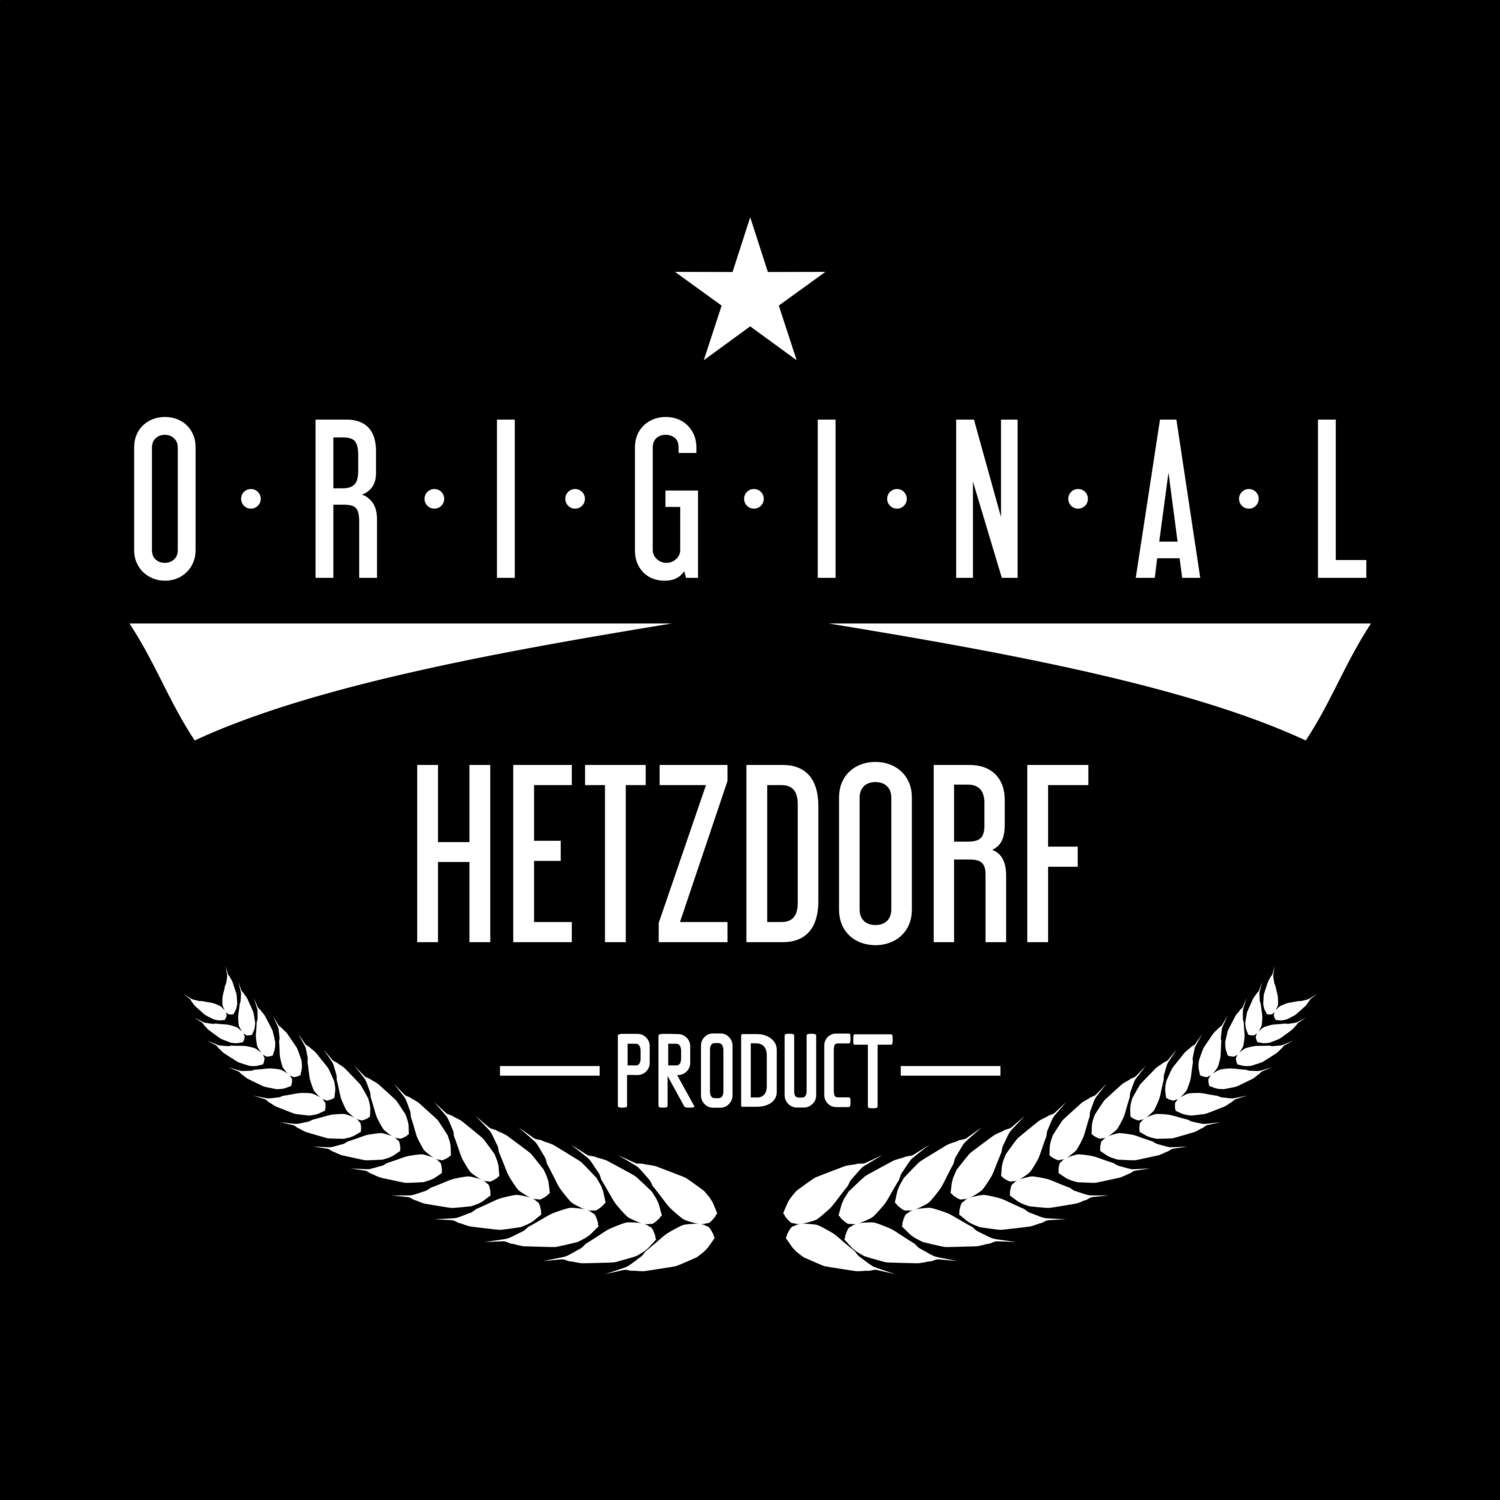 Hetzdorf T-Shirt »Original Product«